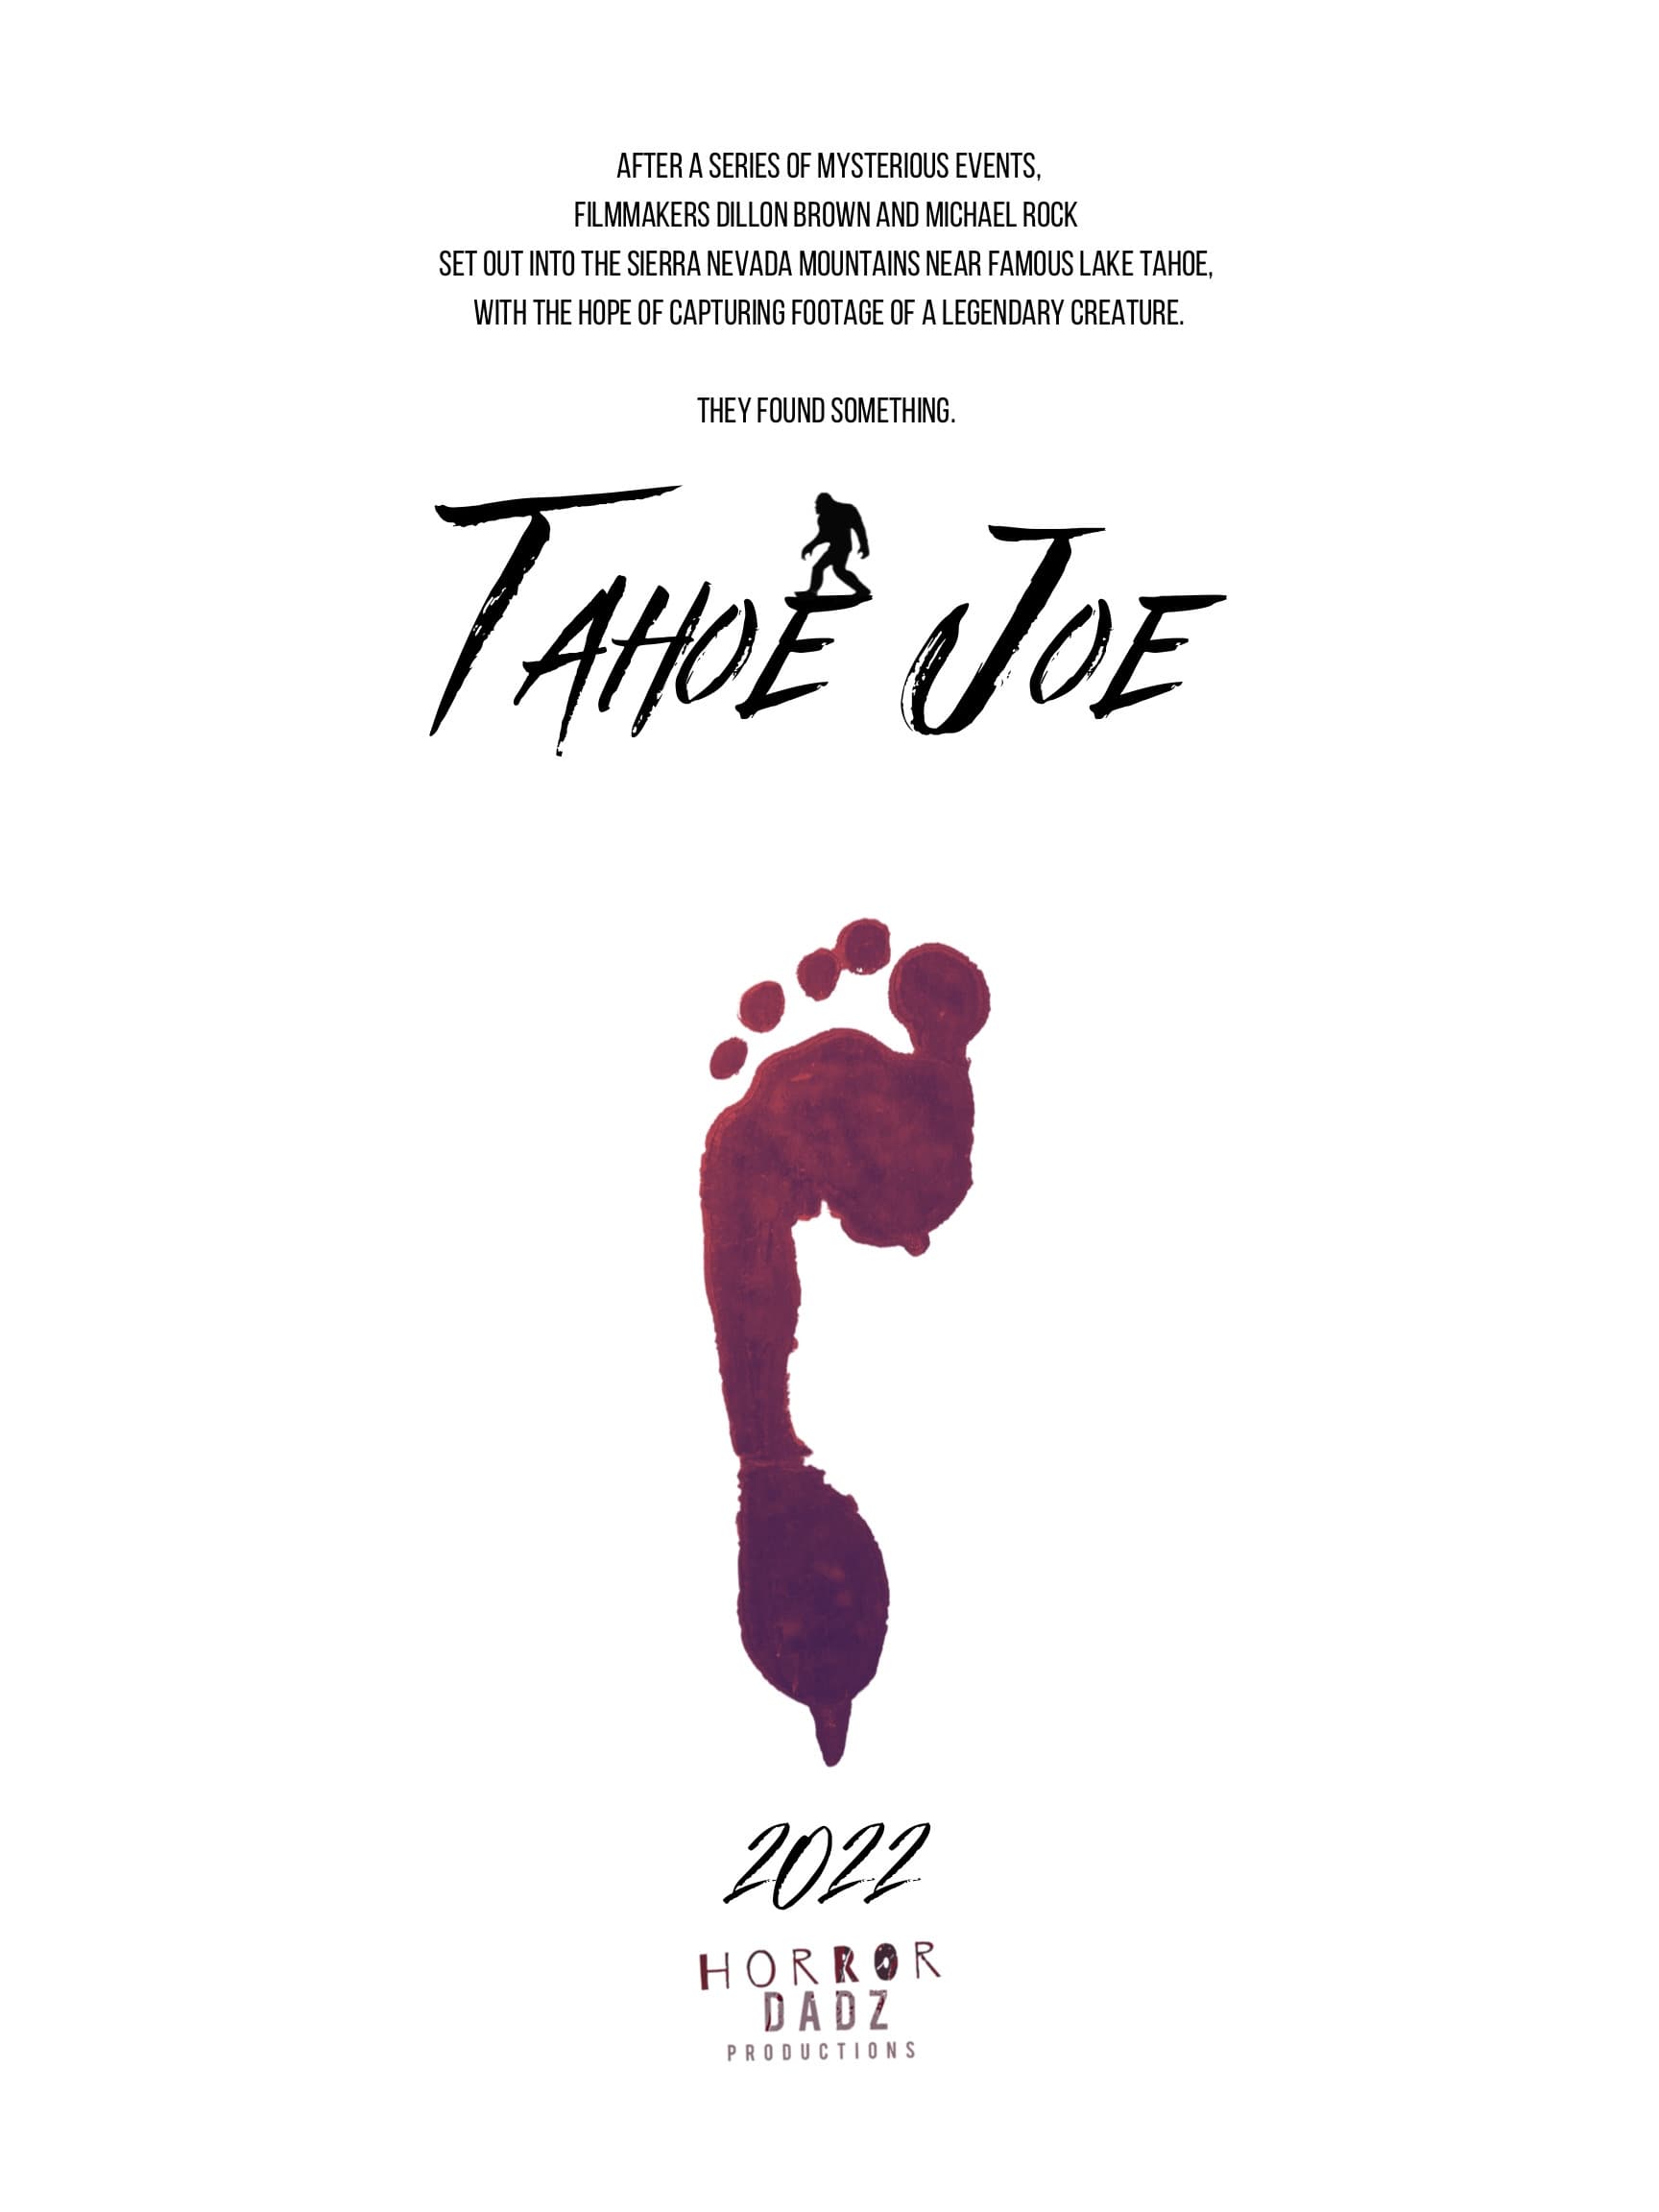 Tahoe Joe (2022) poster - Allmovieland.com